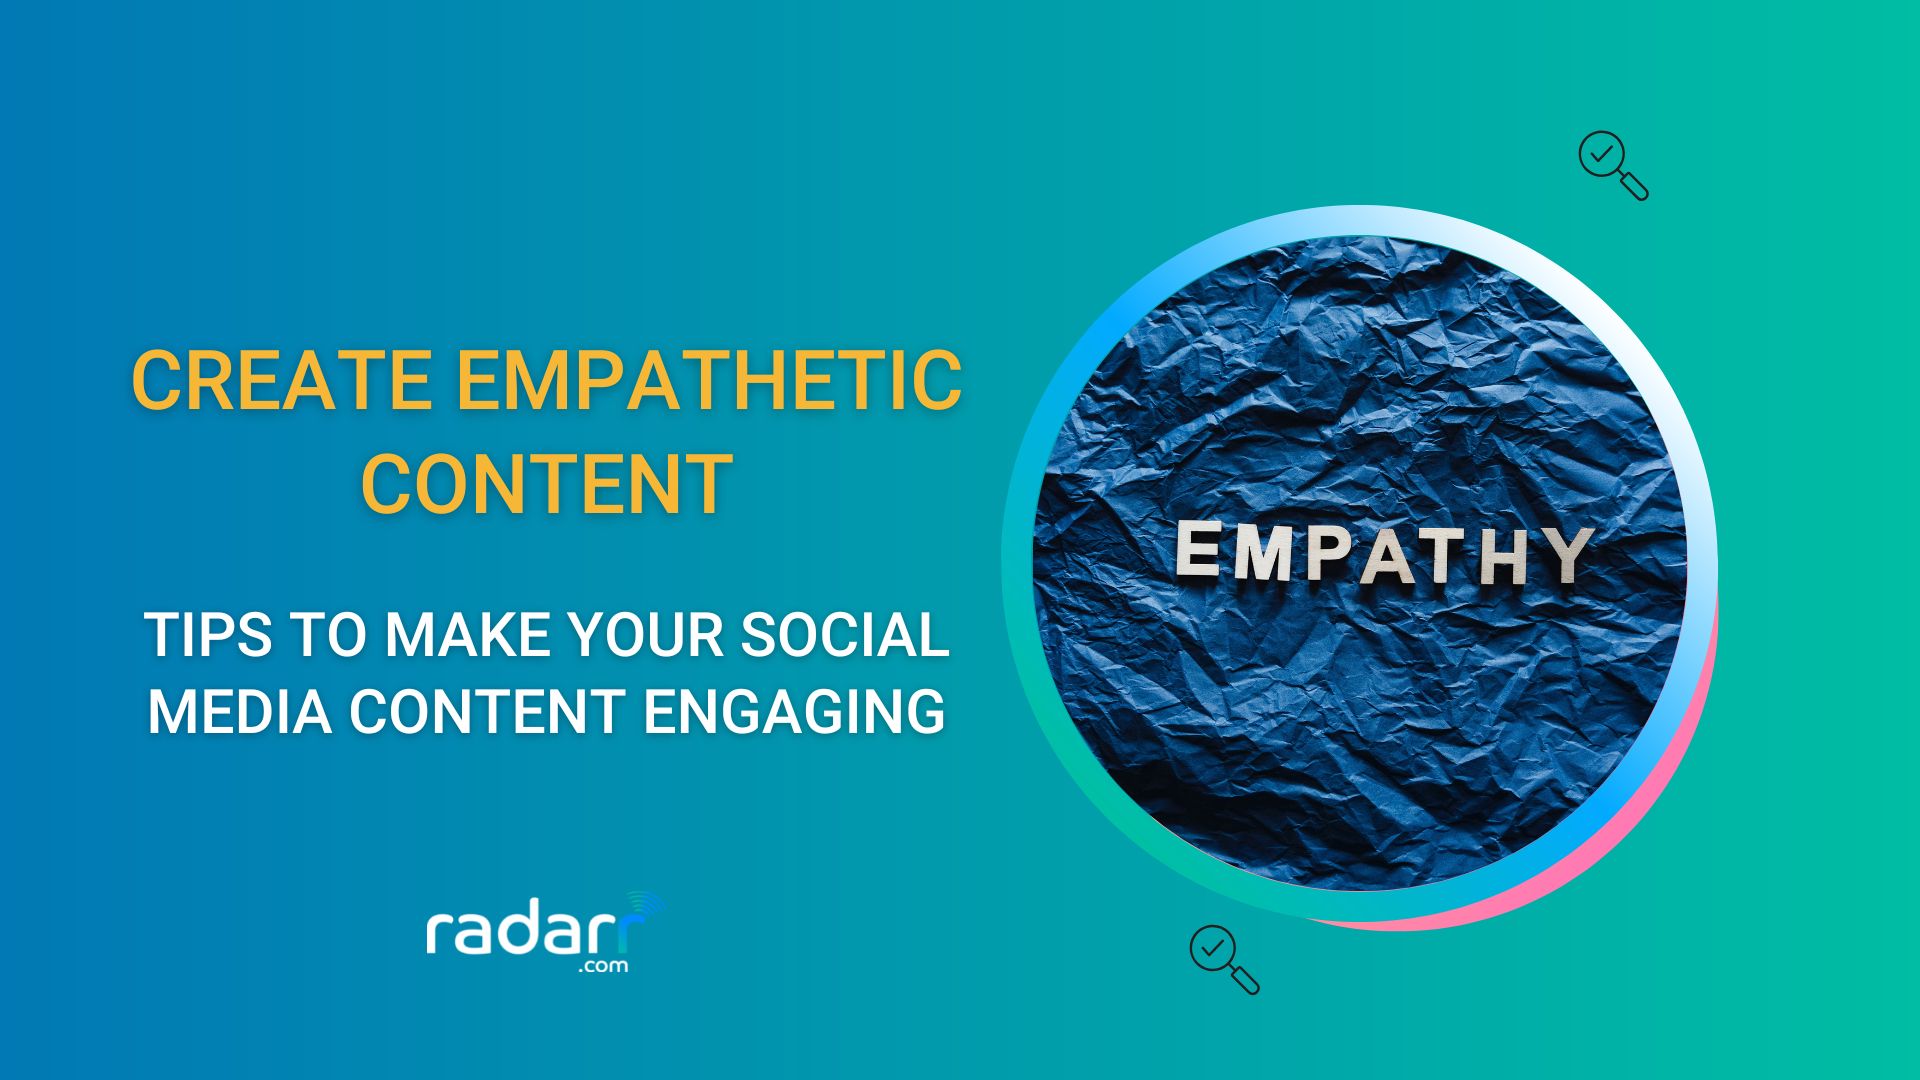 Create empathetic content on social media